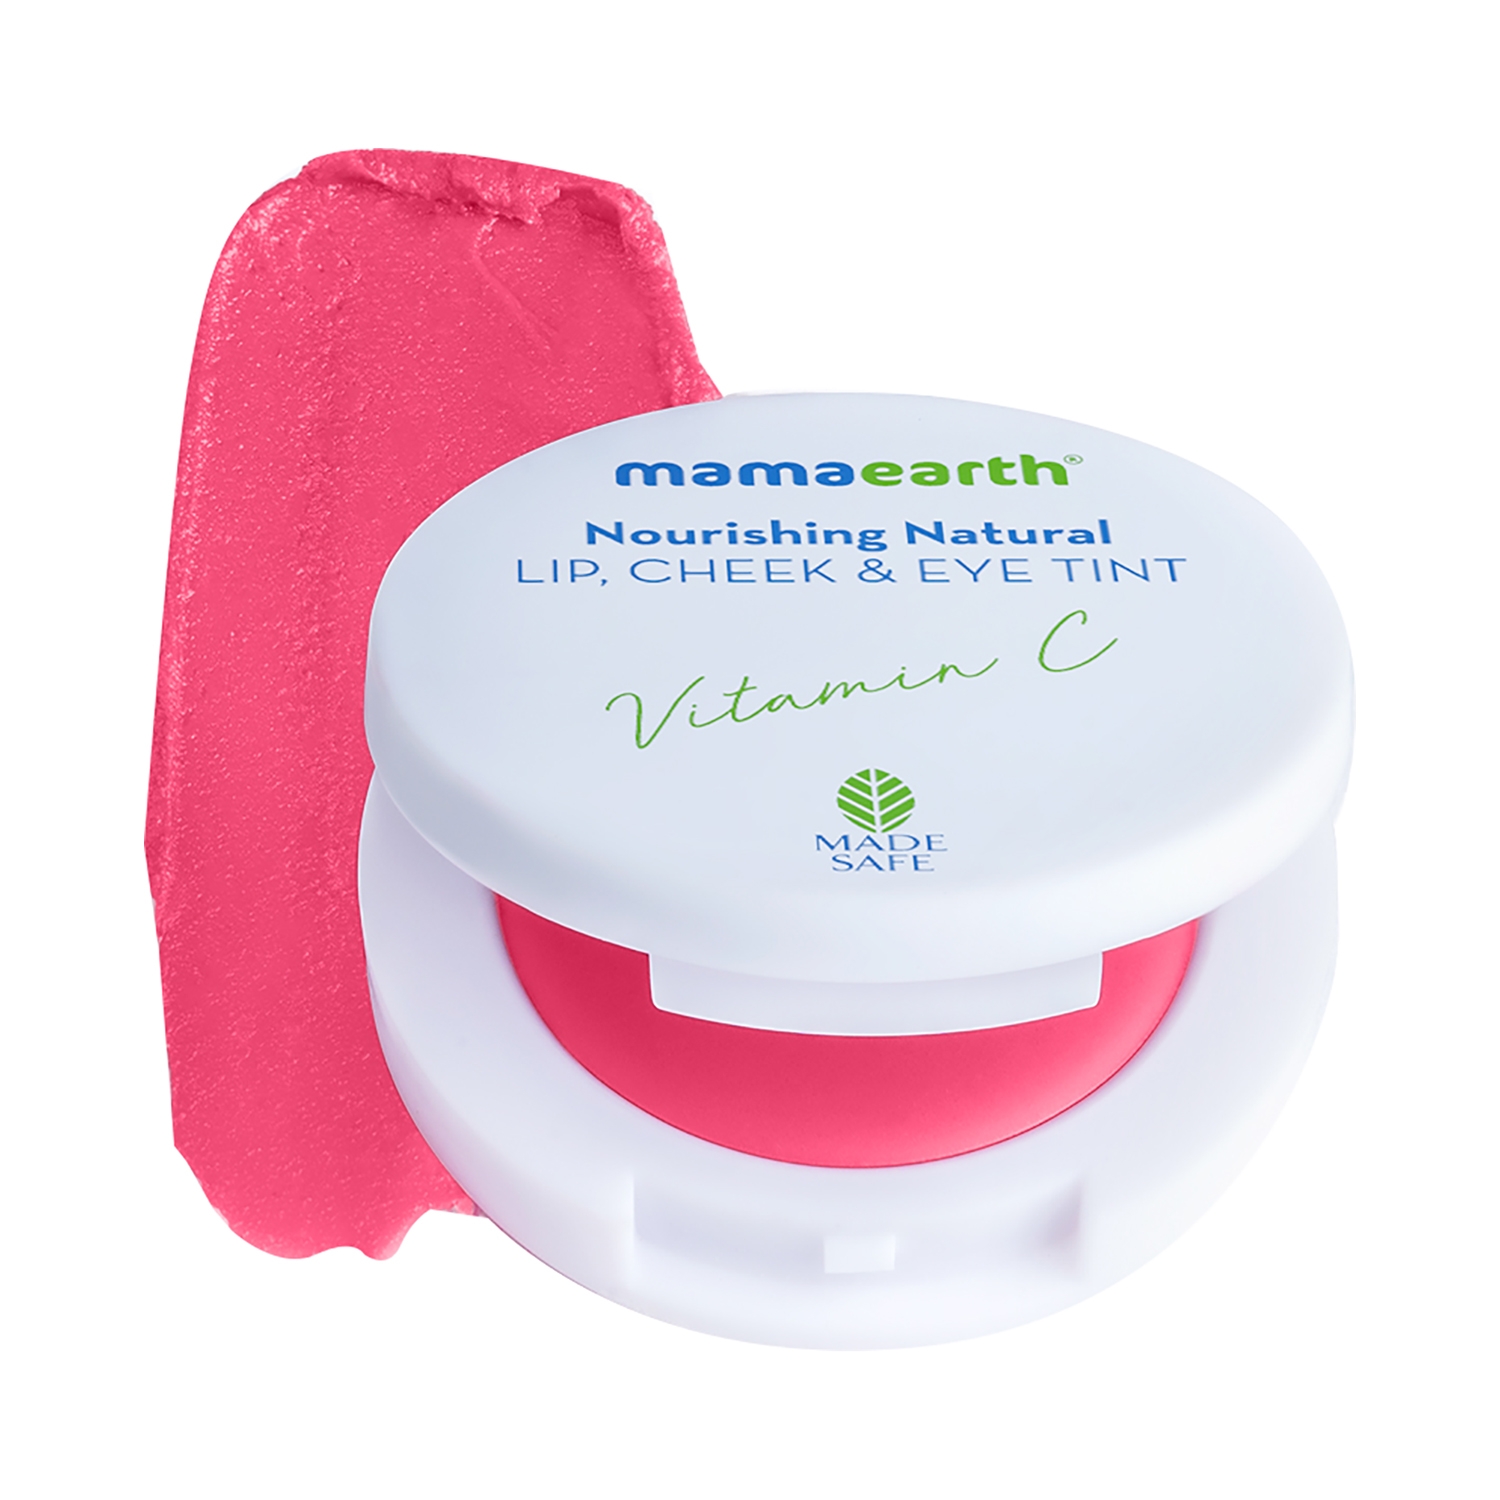 Mamaearth Nourishing Natural Lip Cheek & Eye Tint - 01 Beet Red (4g)